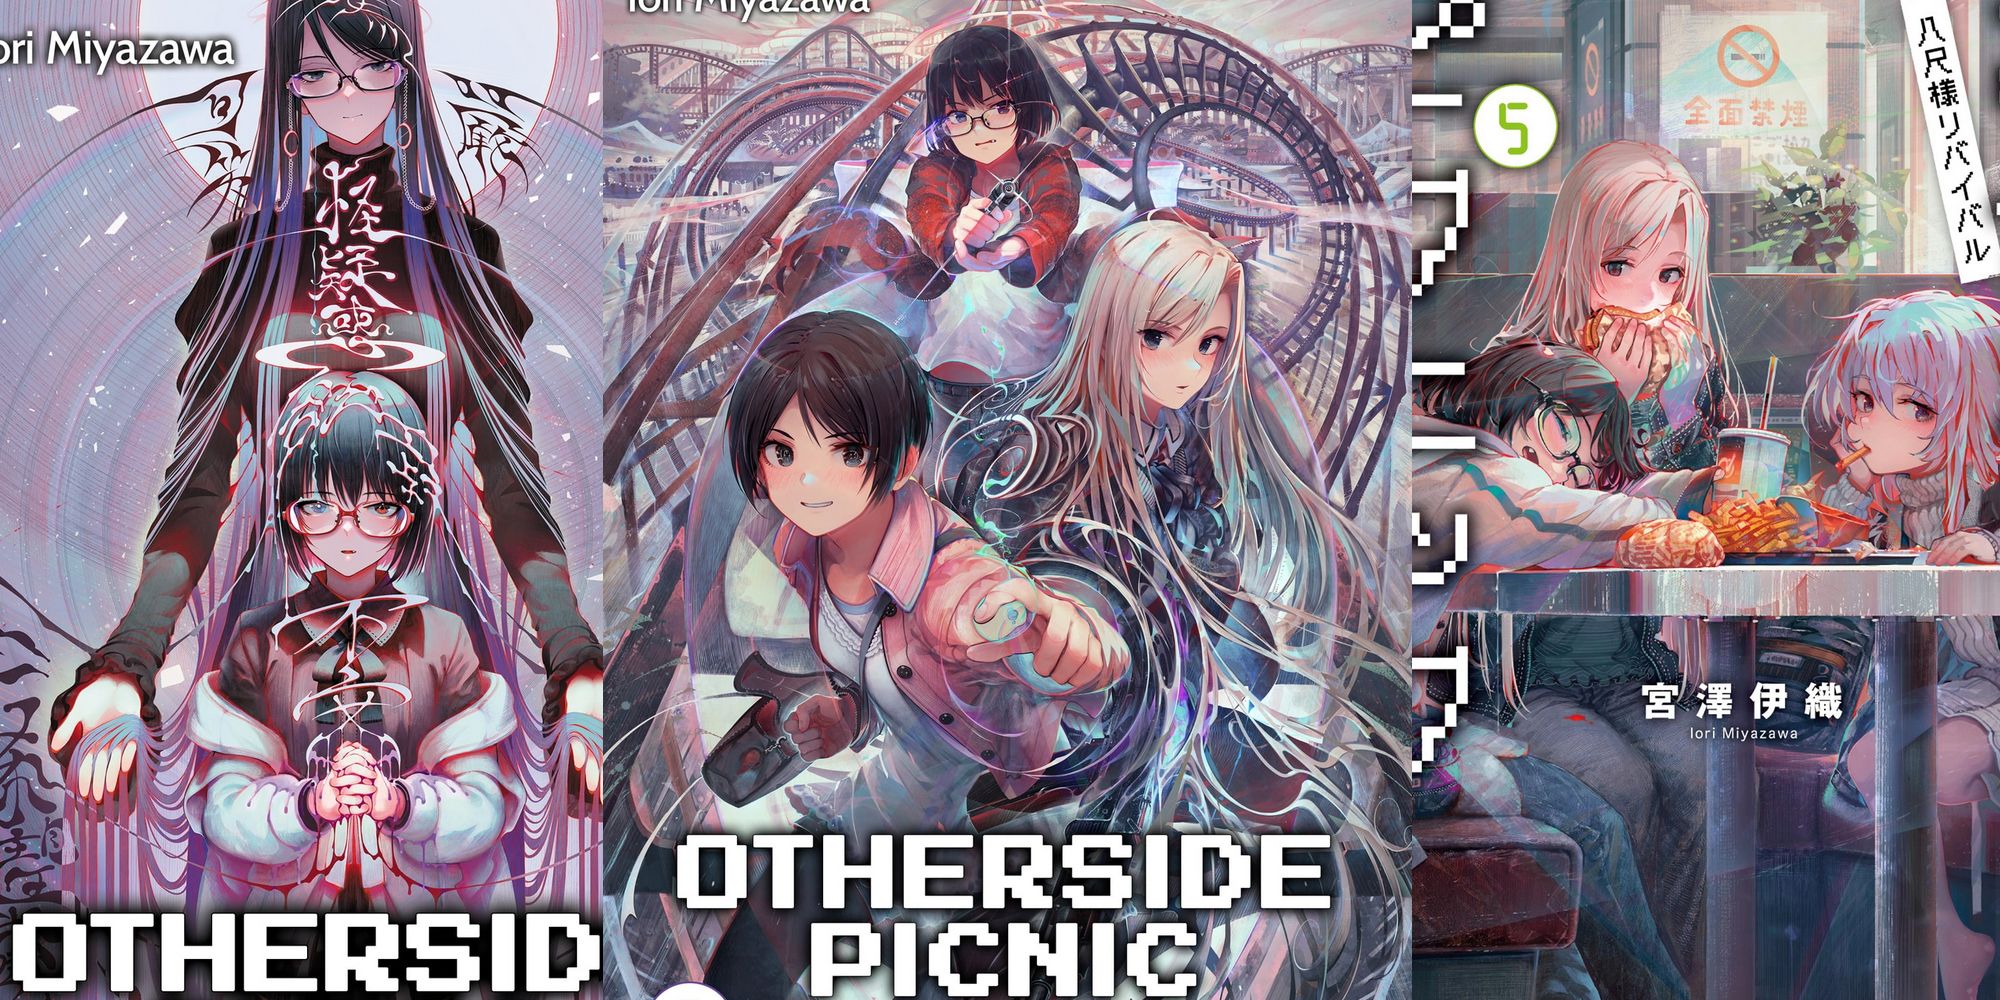 Otherside Picnic covers of the light novel